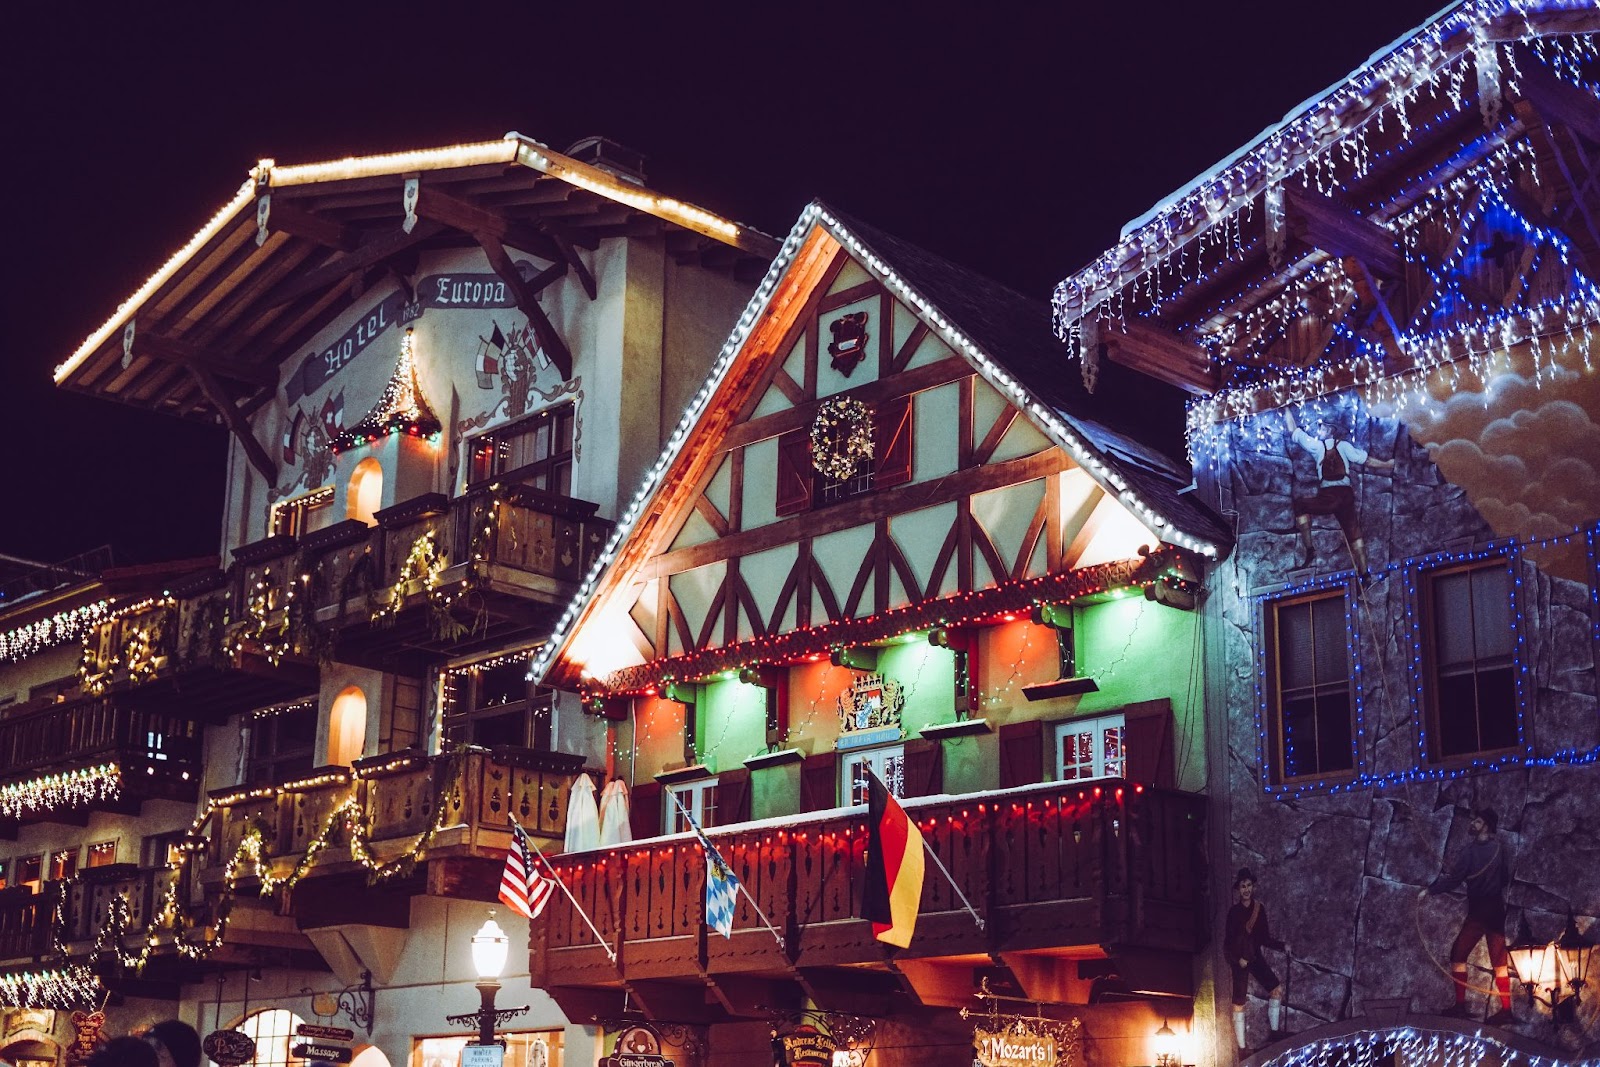 Bavarian-style villages